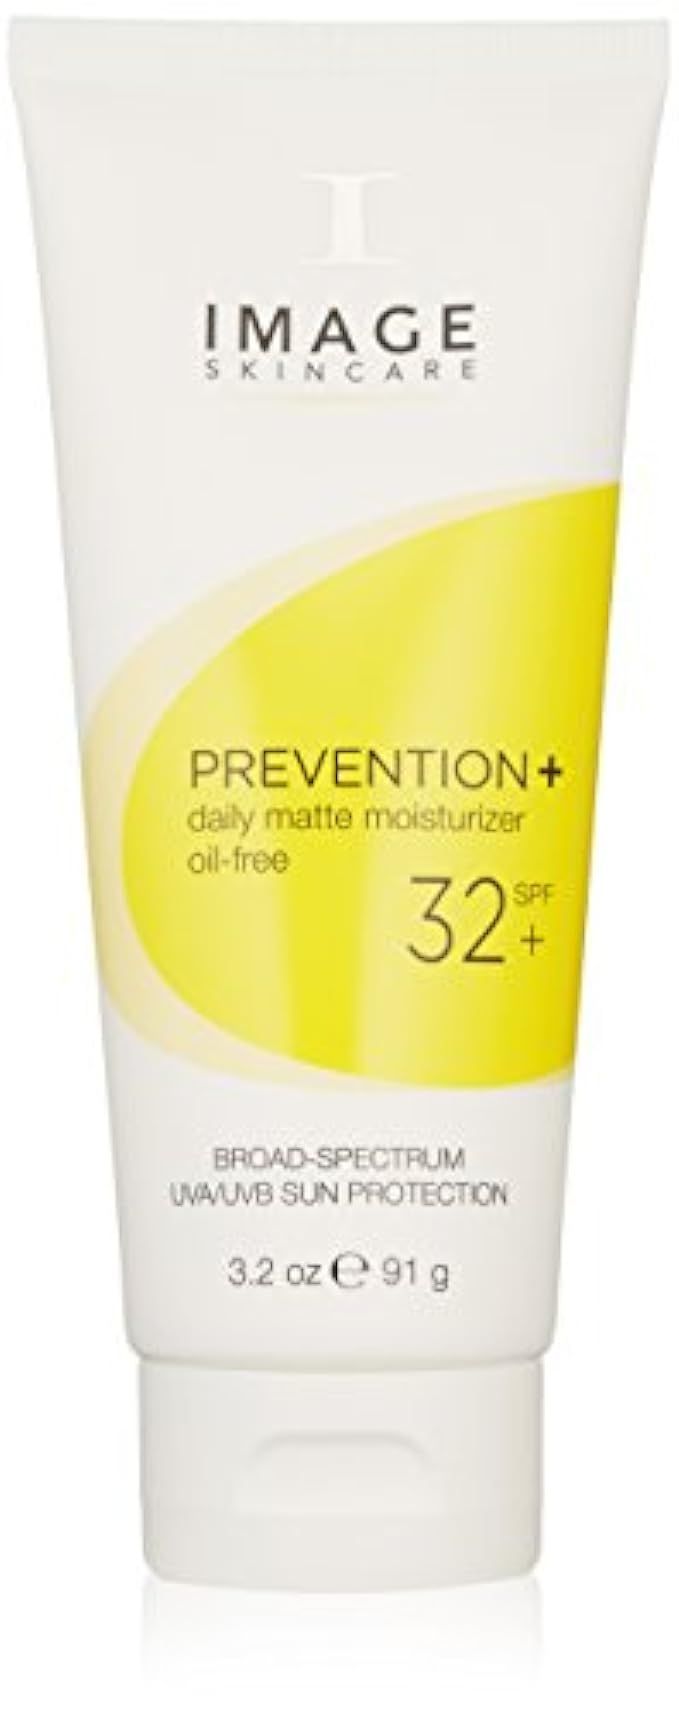 IMAGE Skincare Prevention+ Daily Matte Moisturizer SPF 32+, 3.2 oz. | Amazon (US)